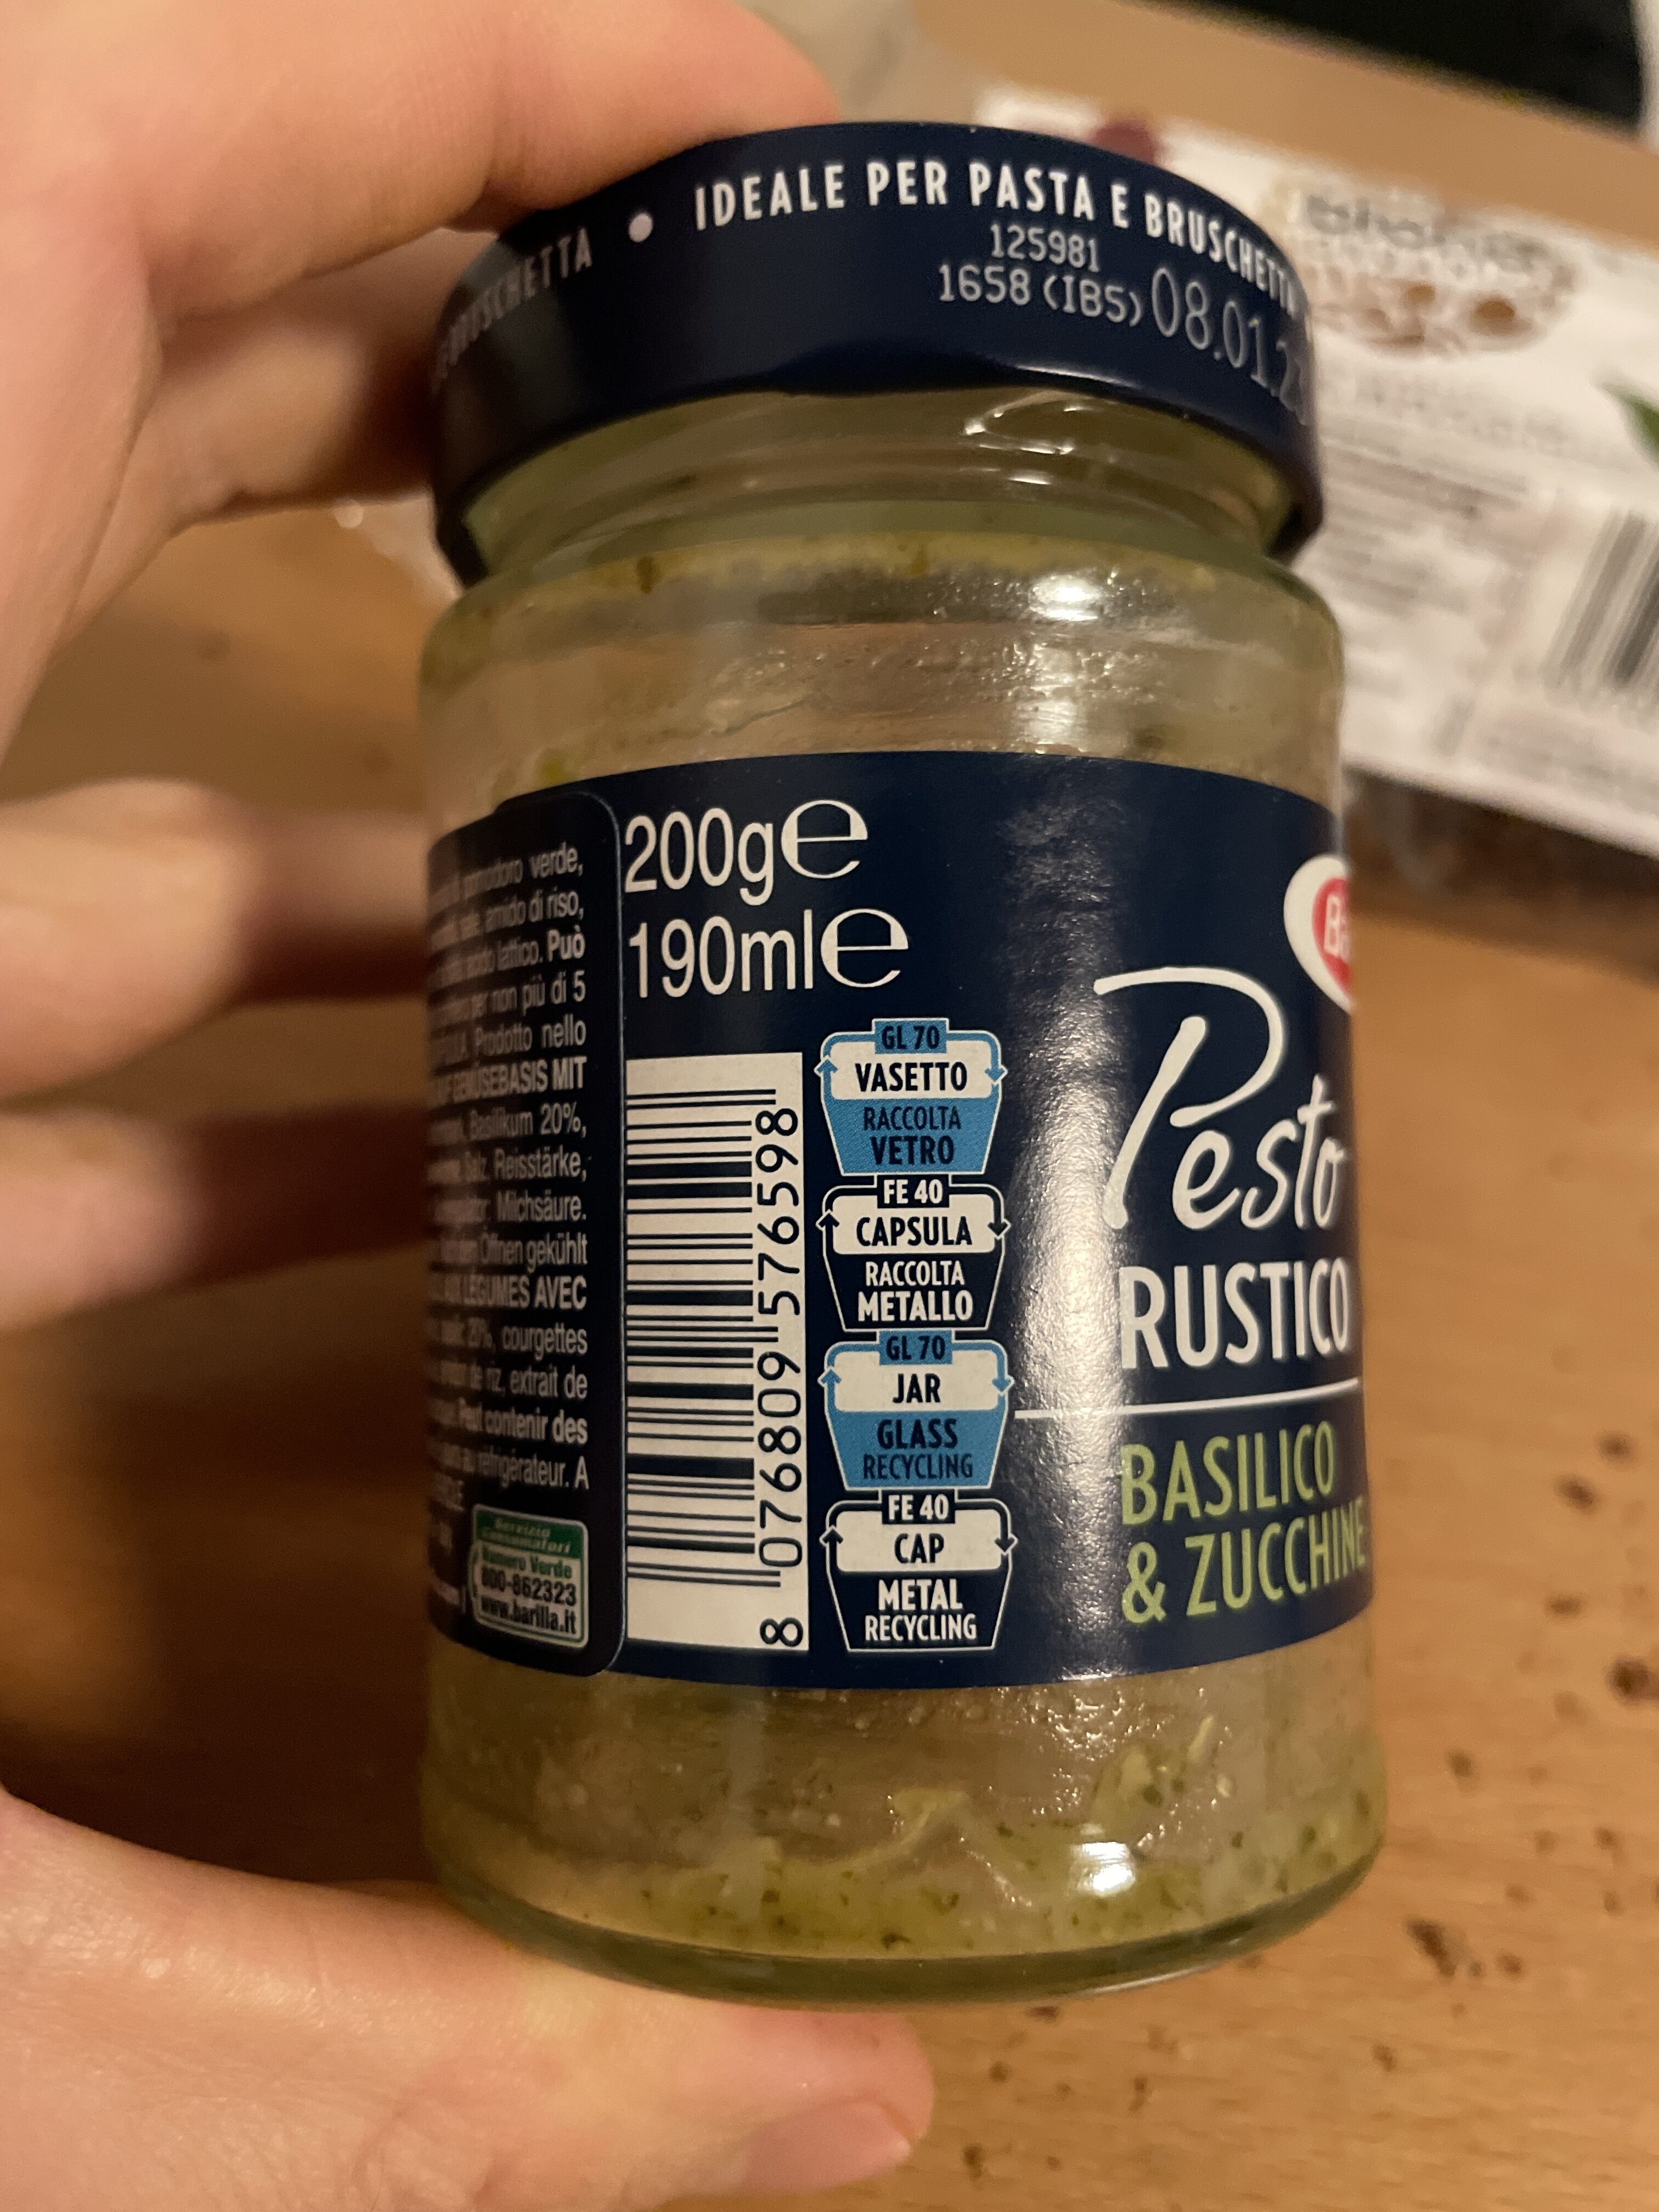 Pesto rustico basilico e zucchine - Instruction de recyclage et/ou informations d'emballage - fr